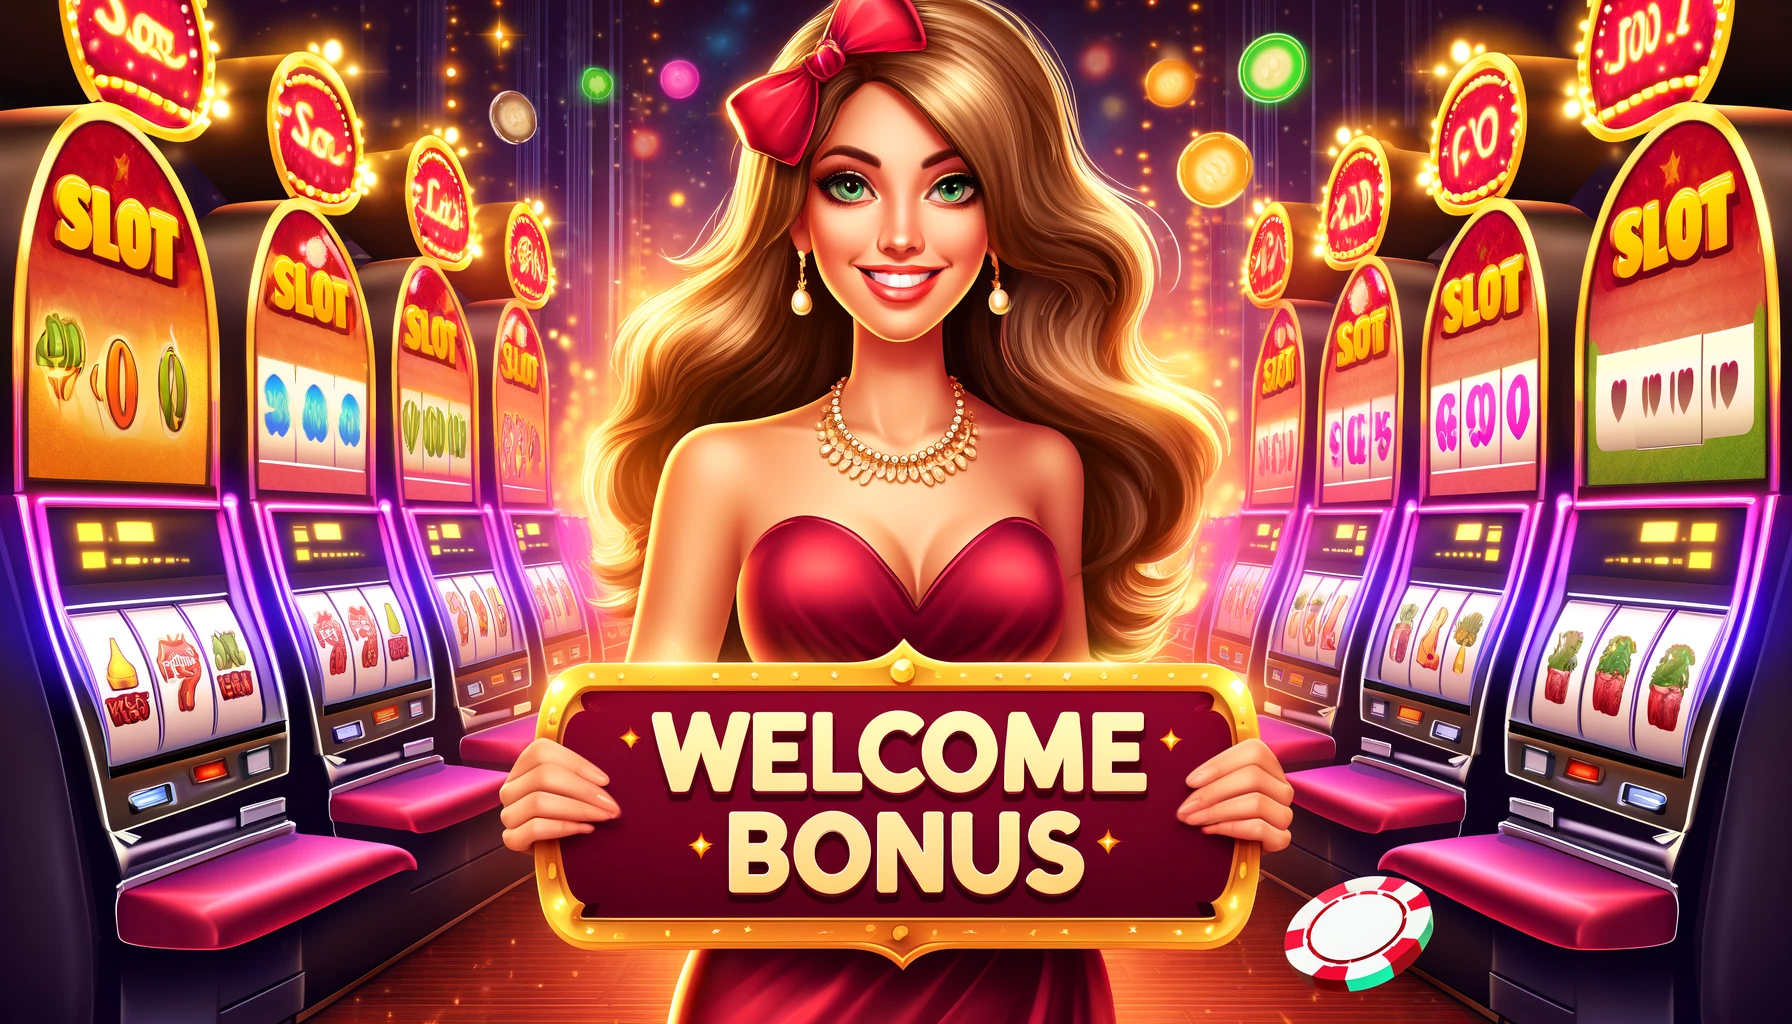 Slot Welcome Bonus